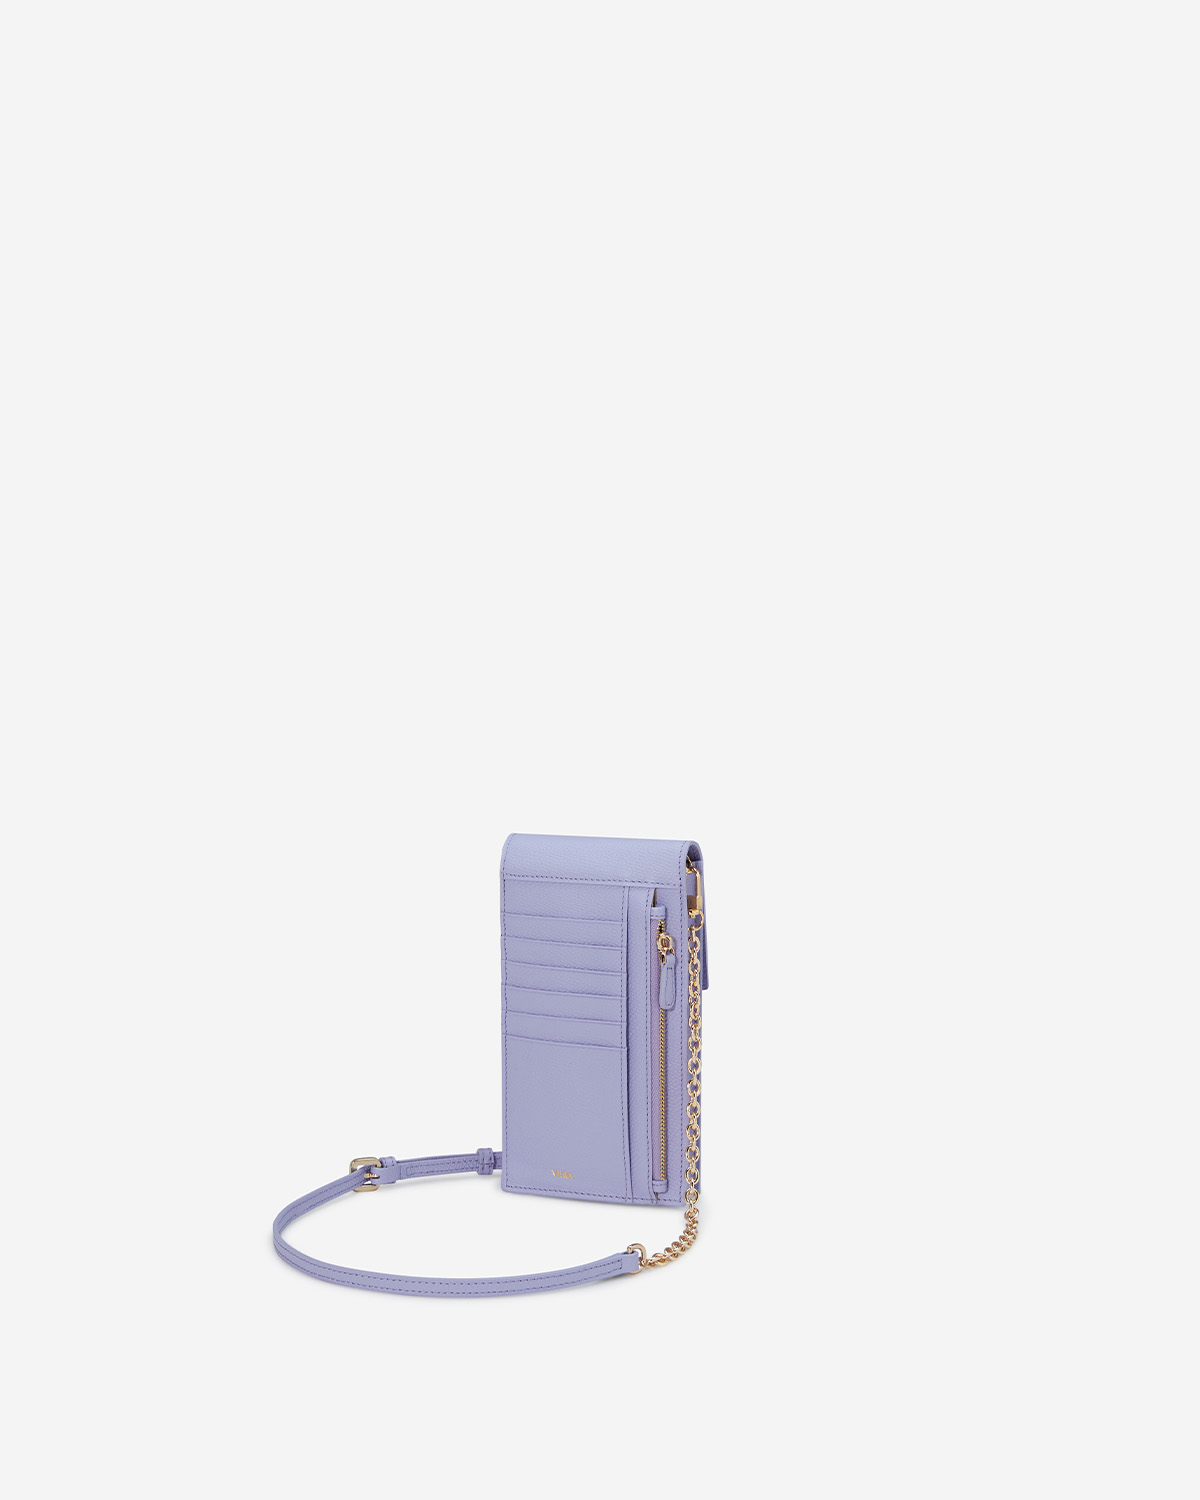 VERA Emily Phone Pouch with Leather Gold Chain in Charming Purple กระเป๋าใส่โทรศัพท์หนังแท้ พร้อมฟังก์ชั่นกระเป๋าสตางค์ มาพร้อมสายสะพายโซ่หนังถอดได้ สีม่วง